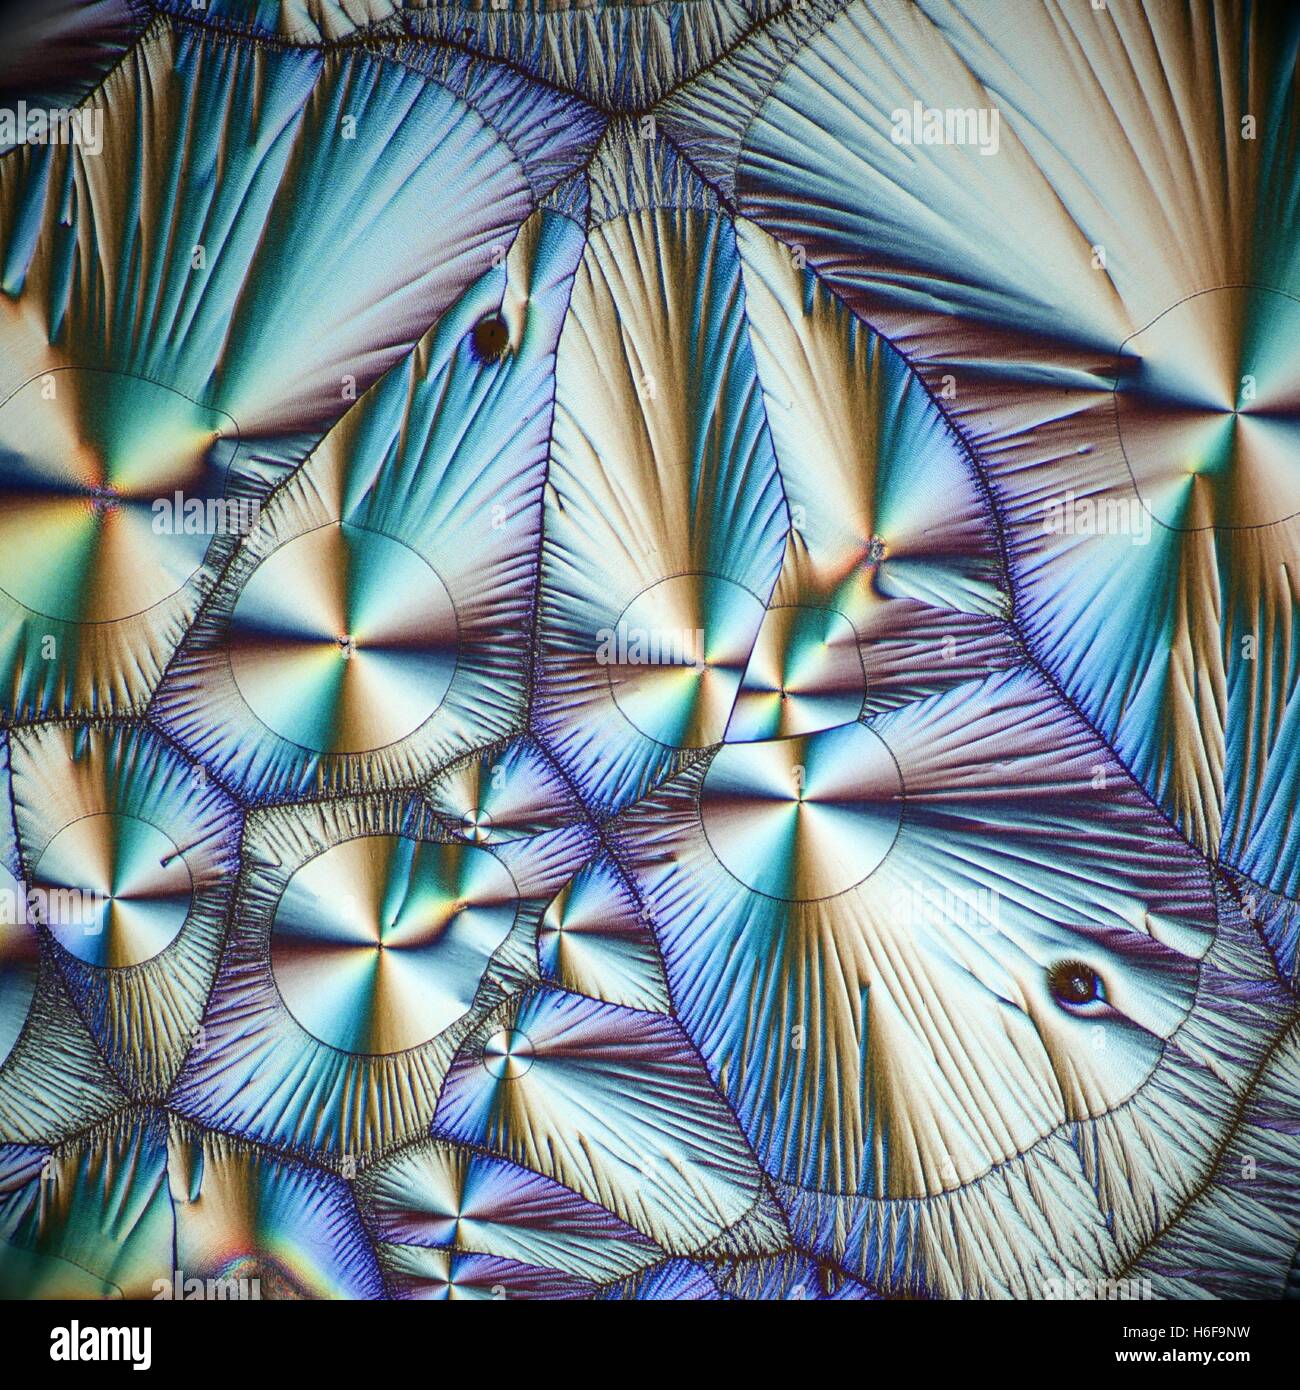 Cristales de Vitamina C, ácido ascórbico. Imagen de microscopio Fotografía  de stock - Alamy